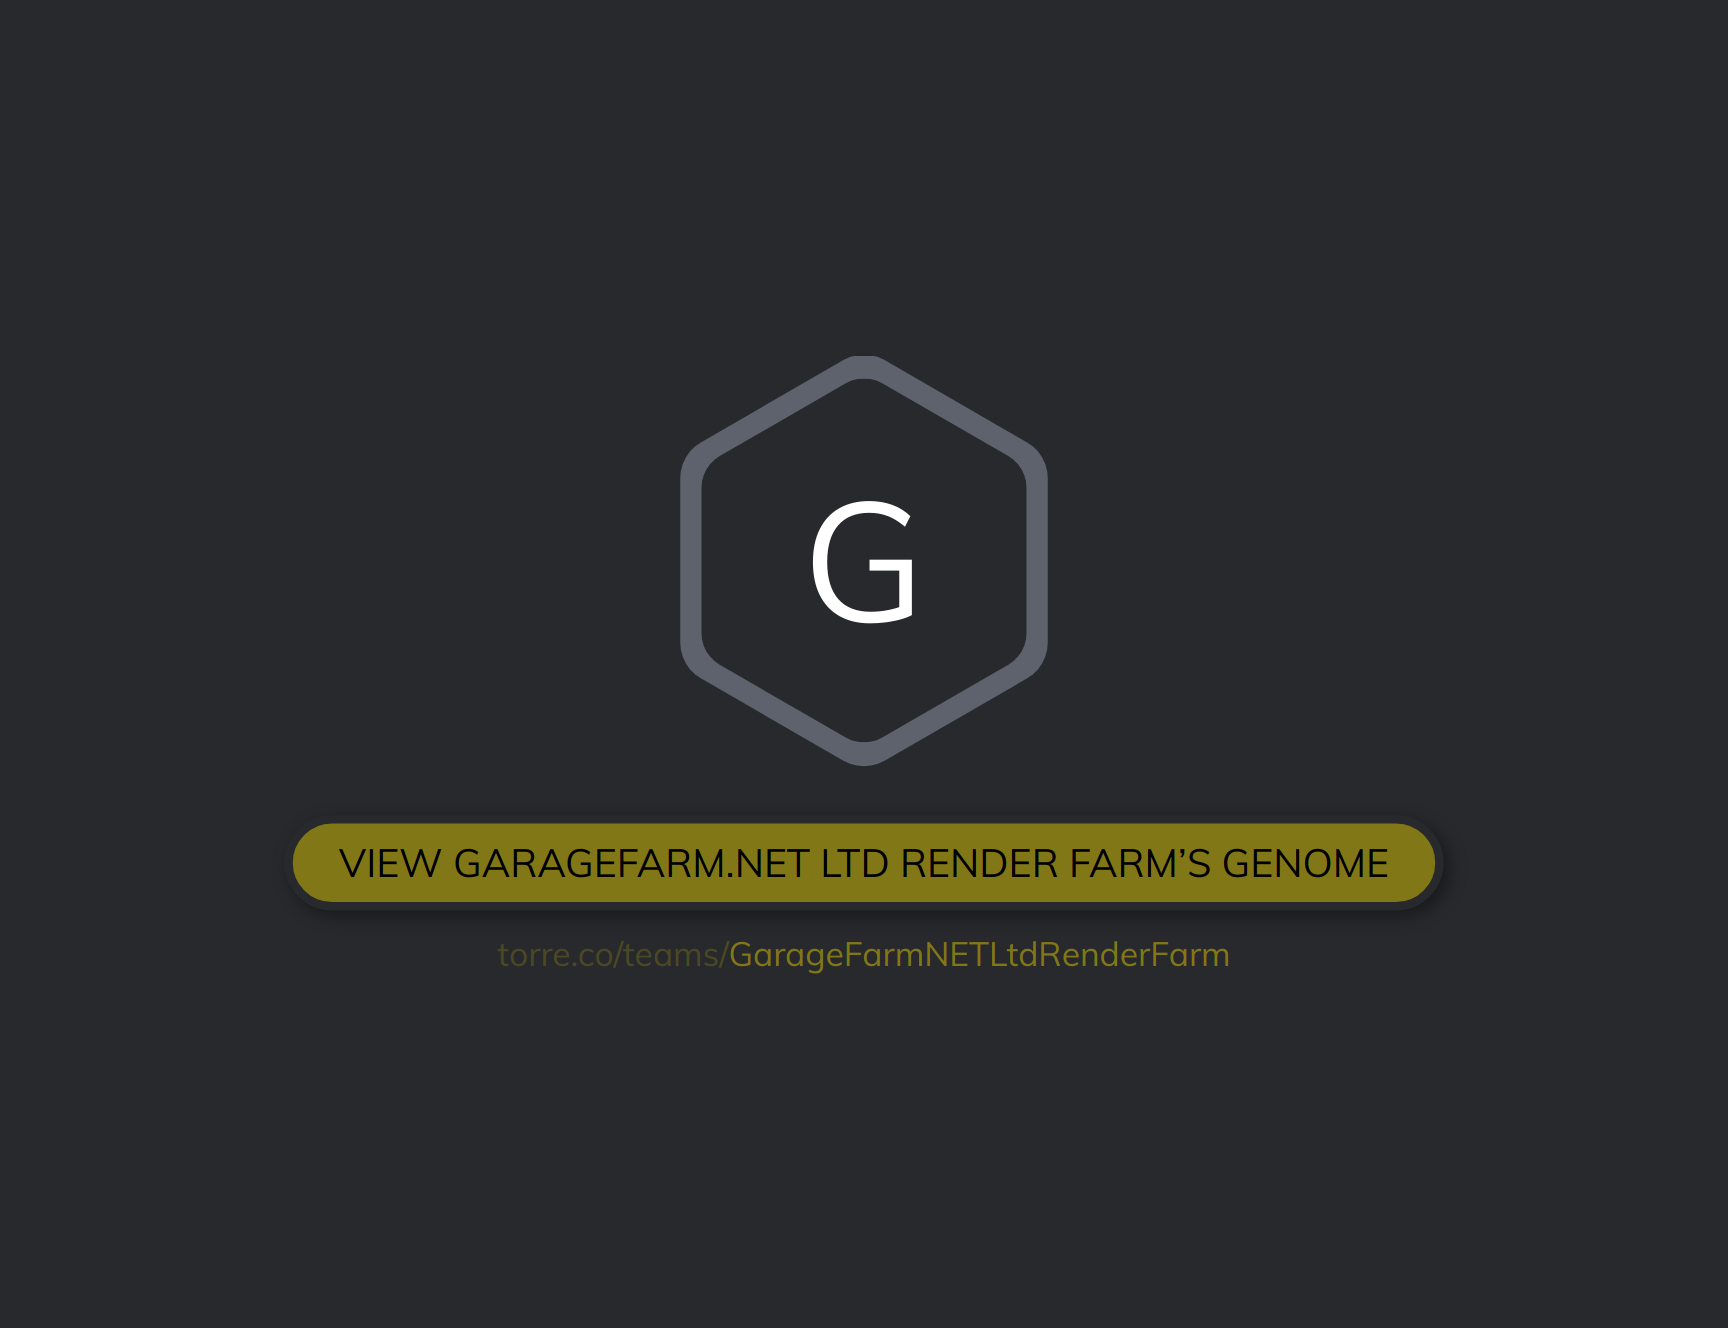 GarageFarm.NET Ltd Render Farm - Torre